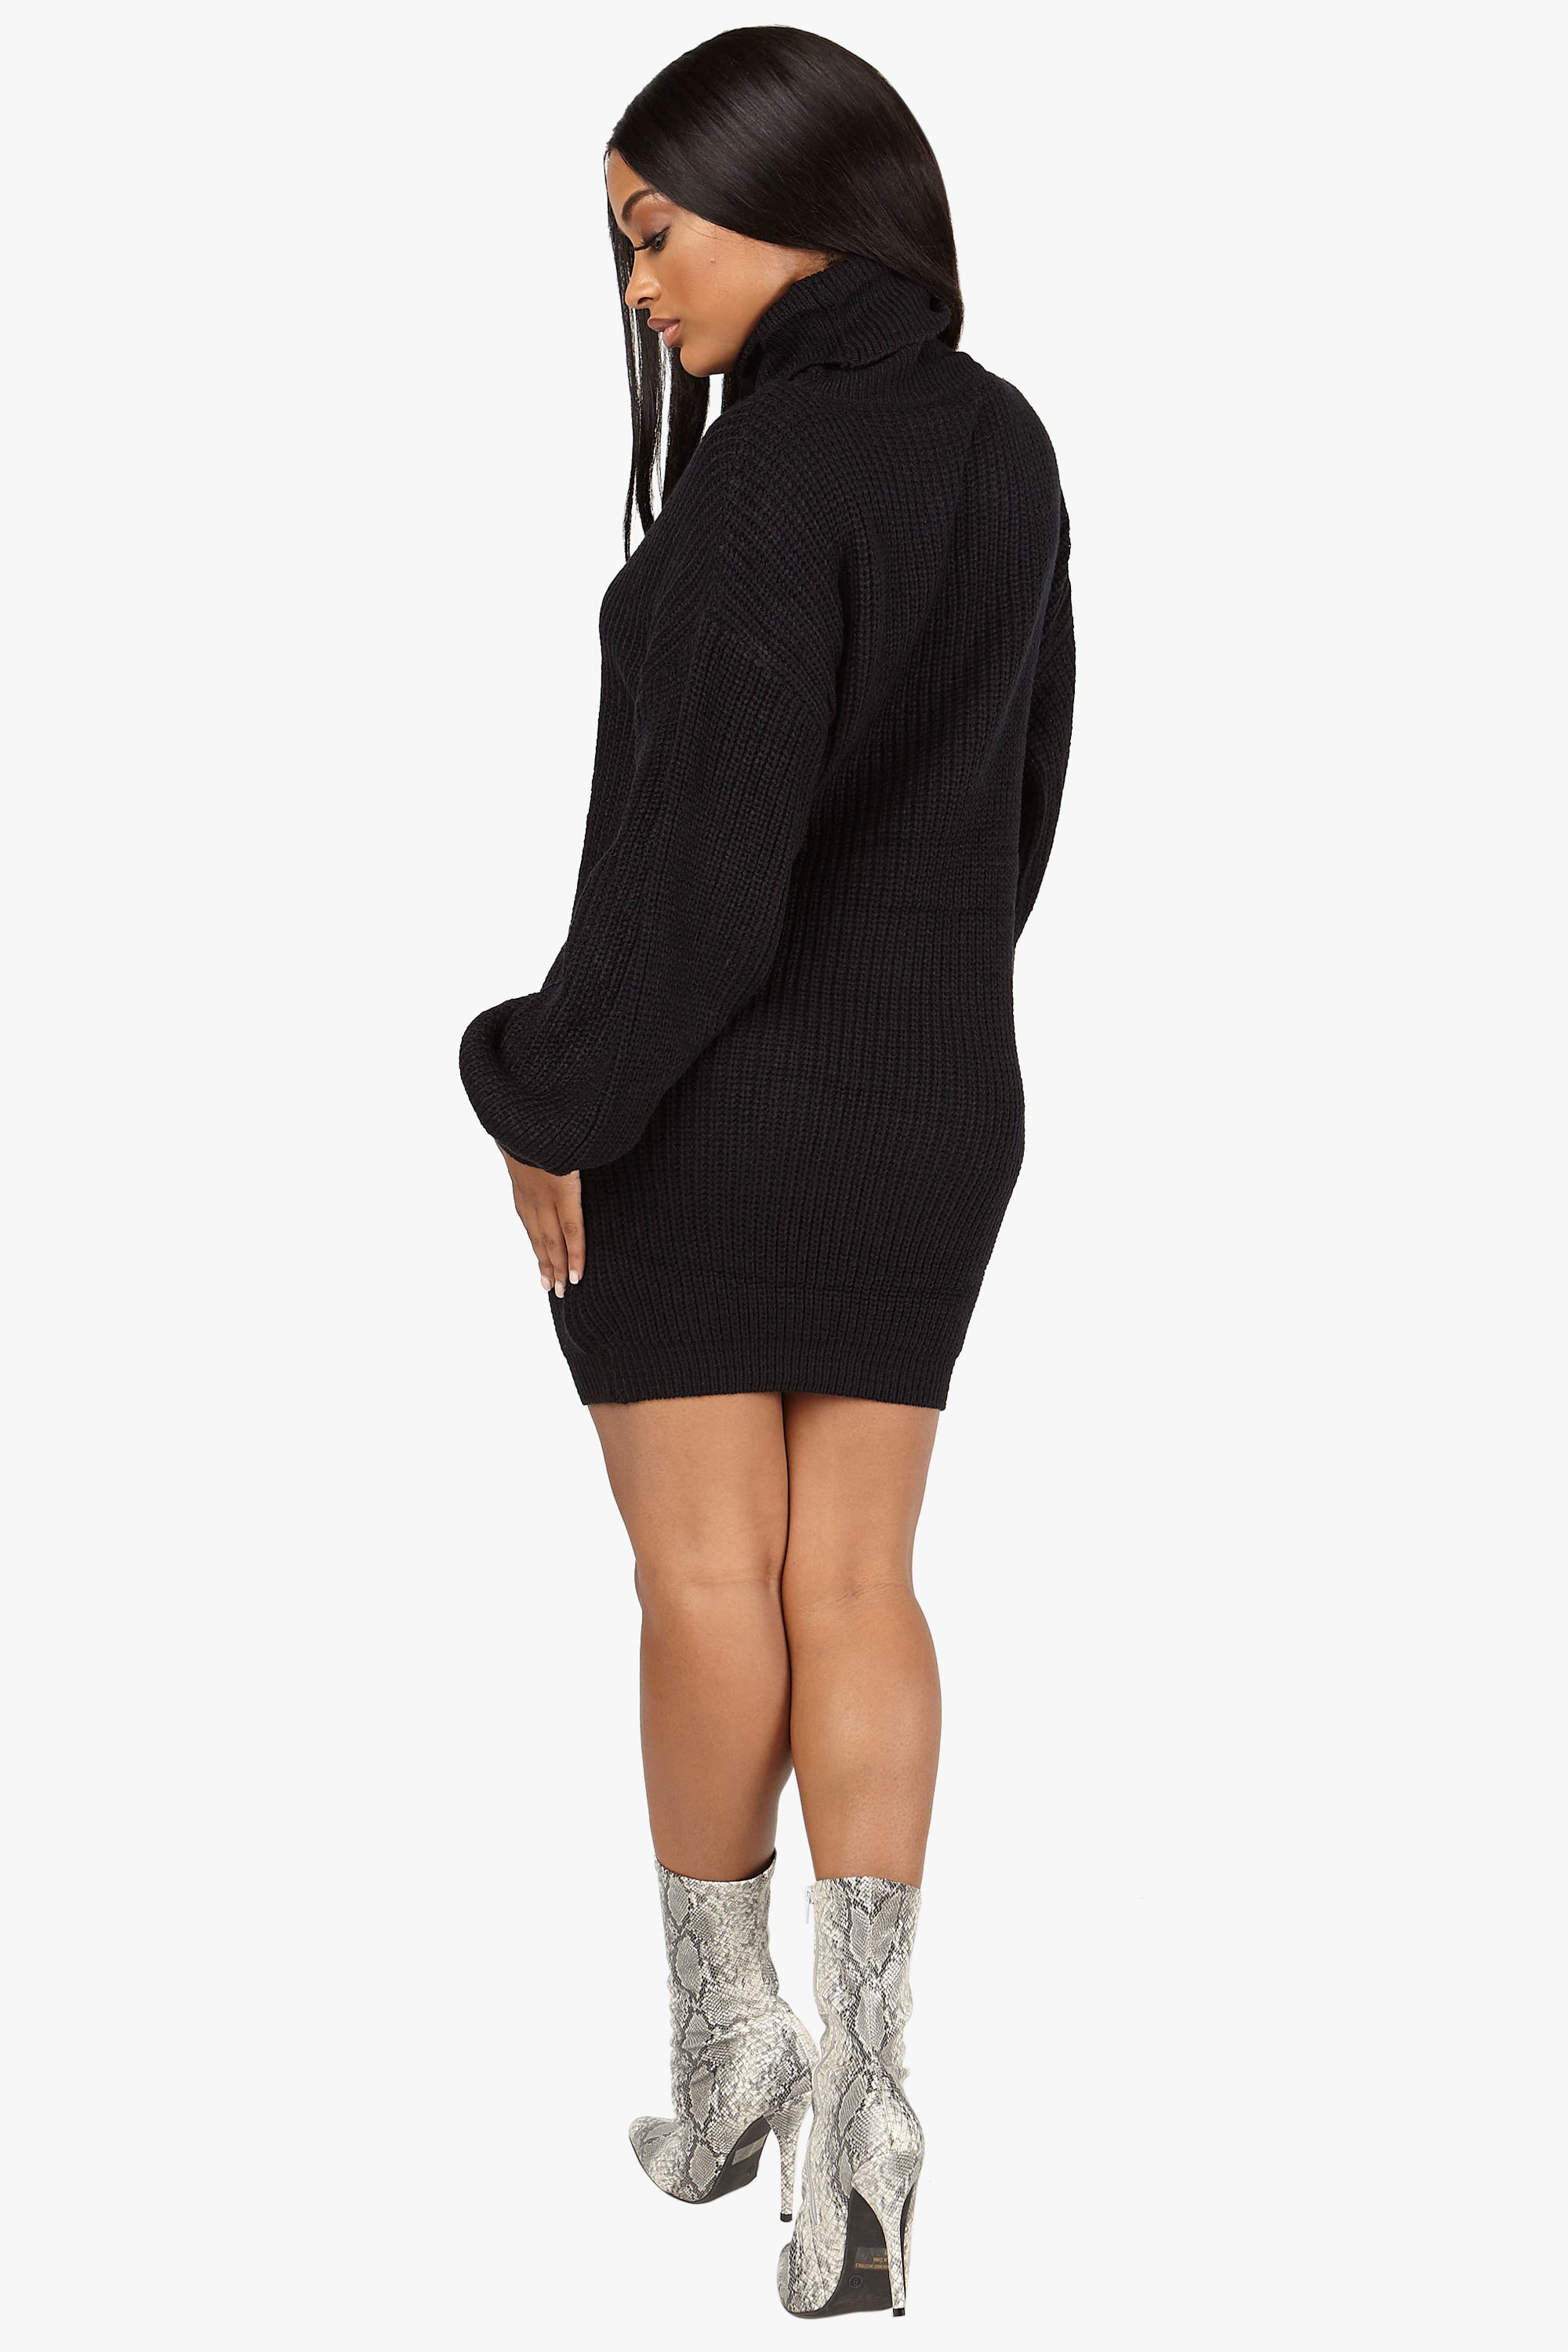 The Usual Oversized Turtleneck Sweater Dress